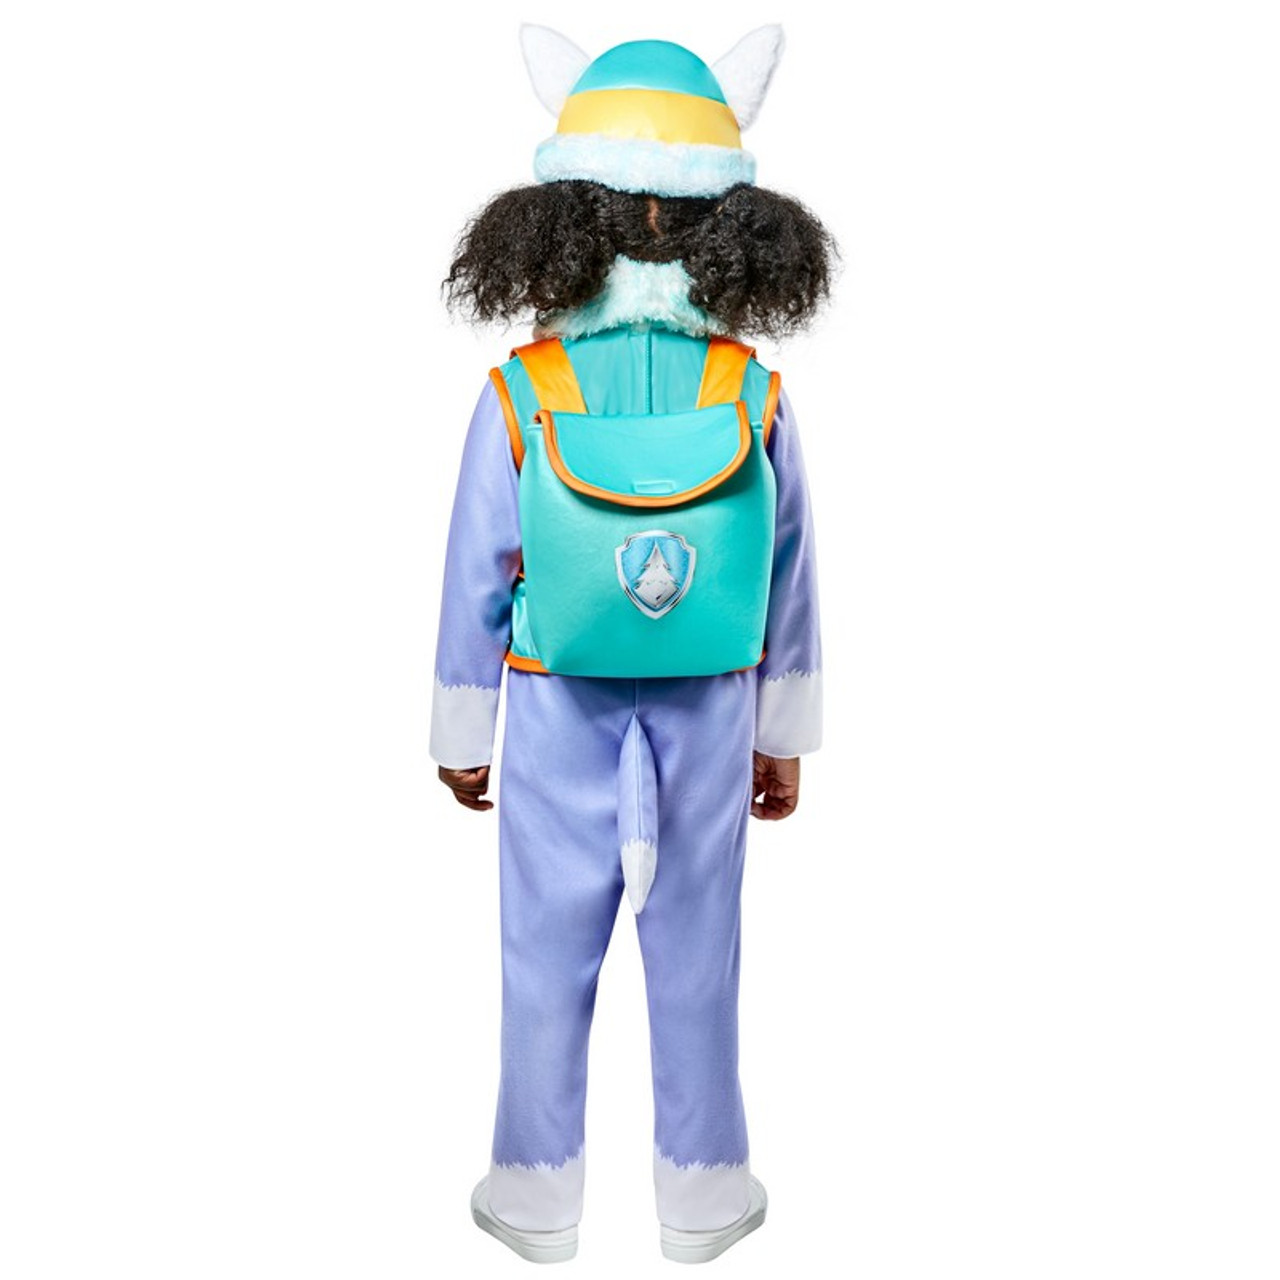 Paw Patrol Everest Toddler Costume